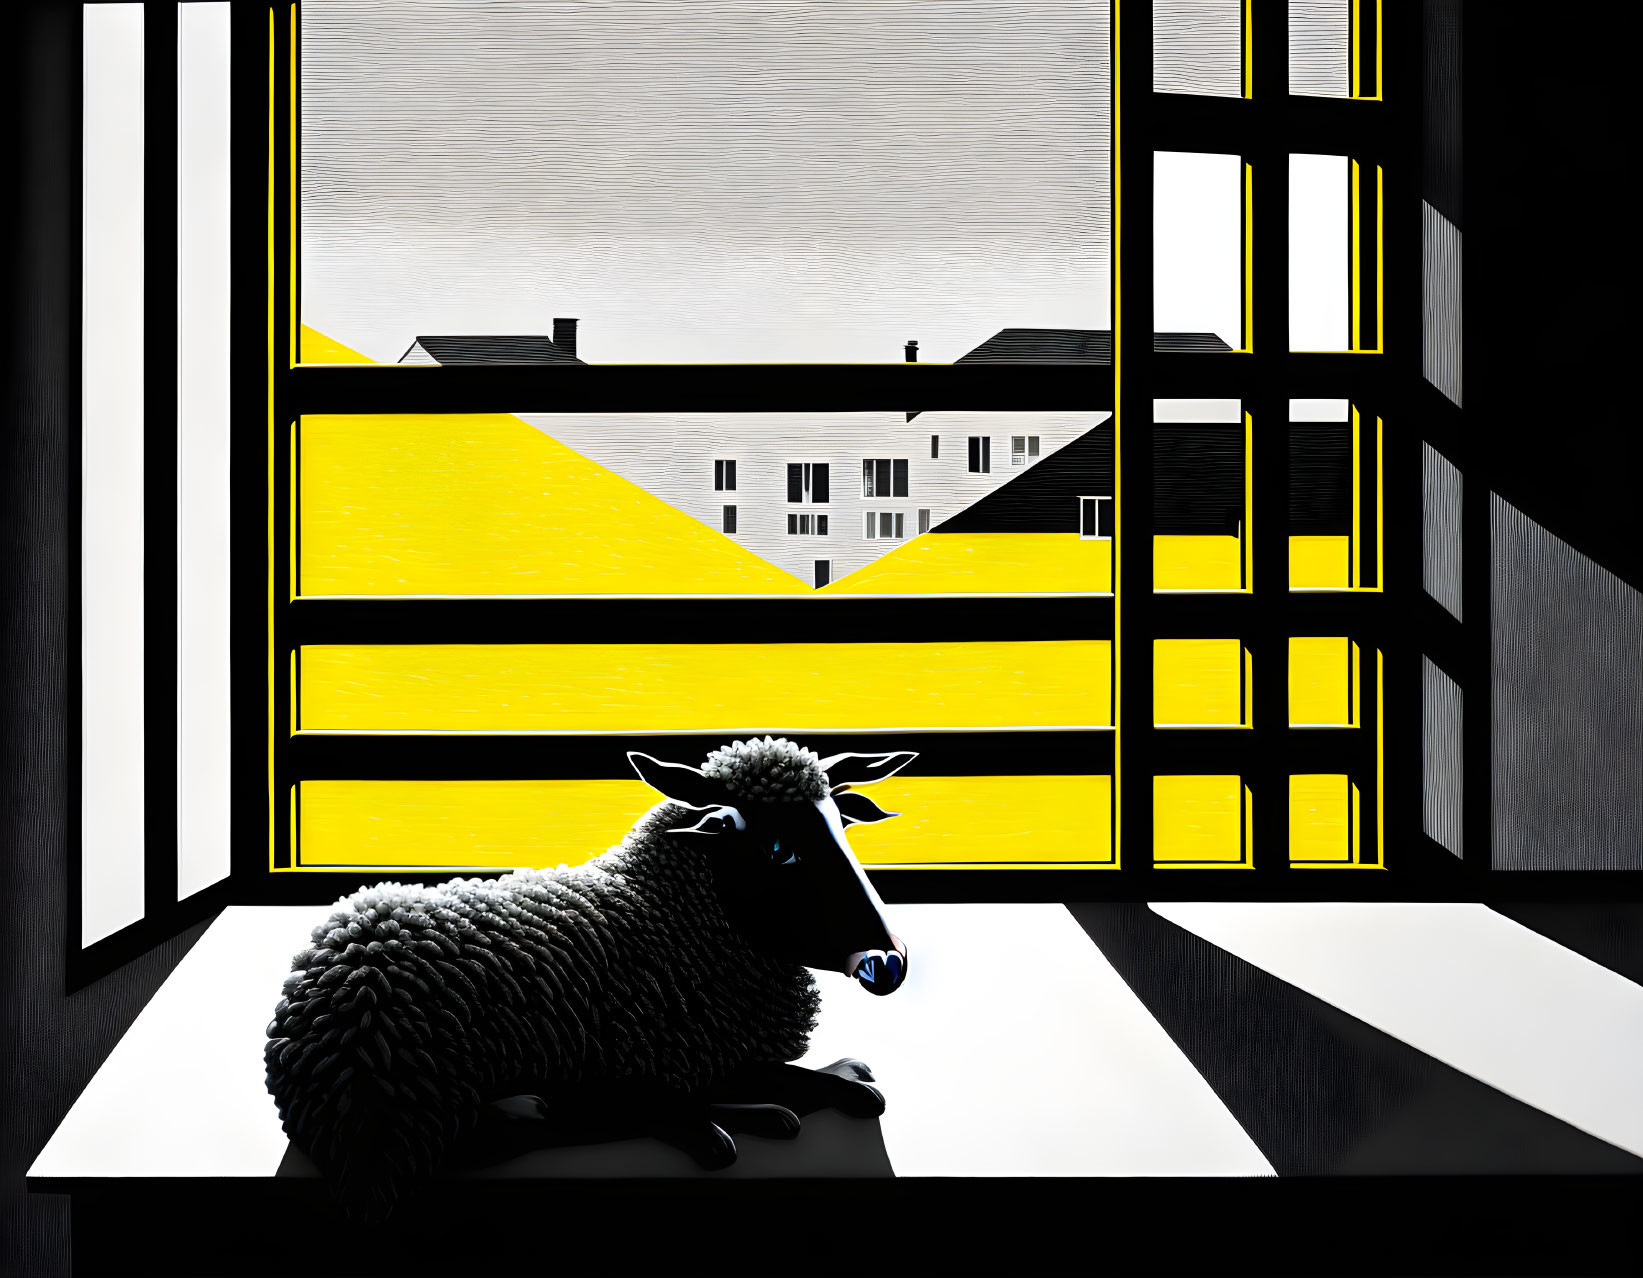  sheep sitting next to a window